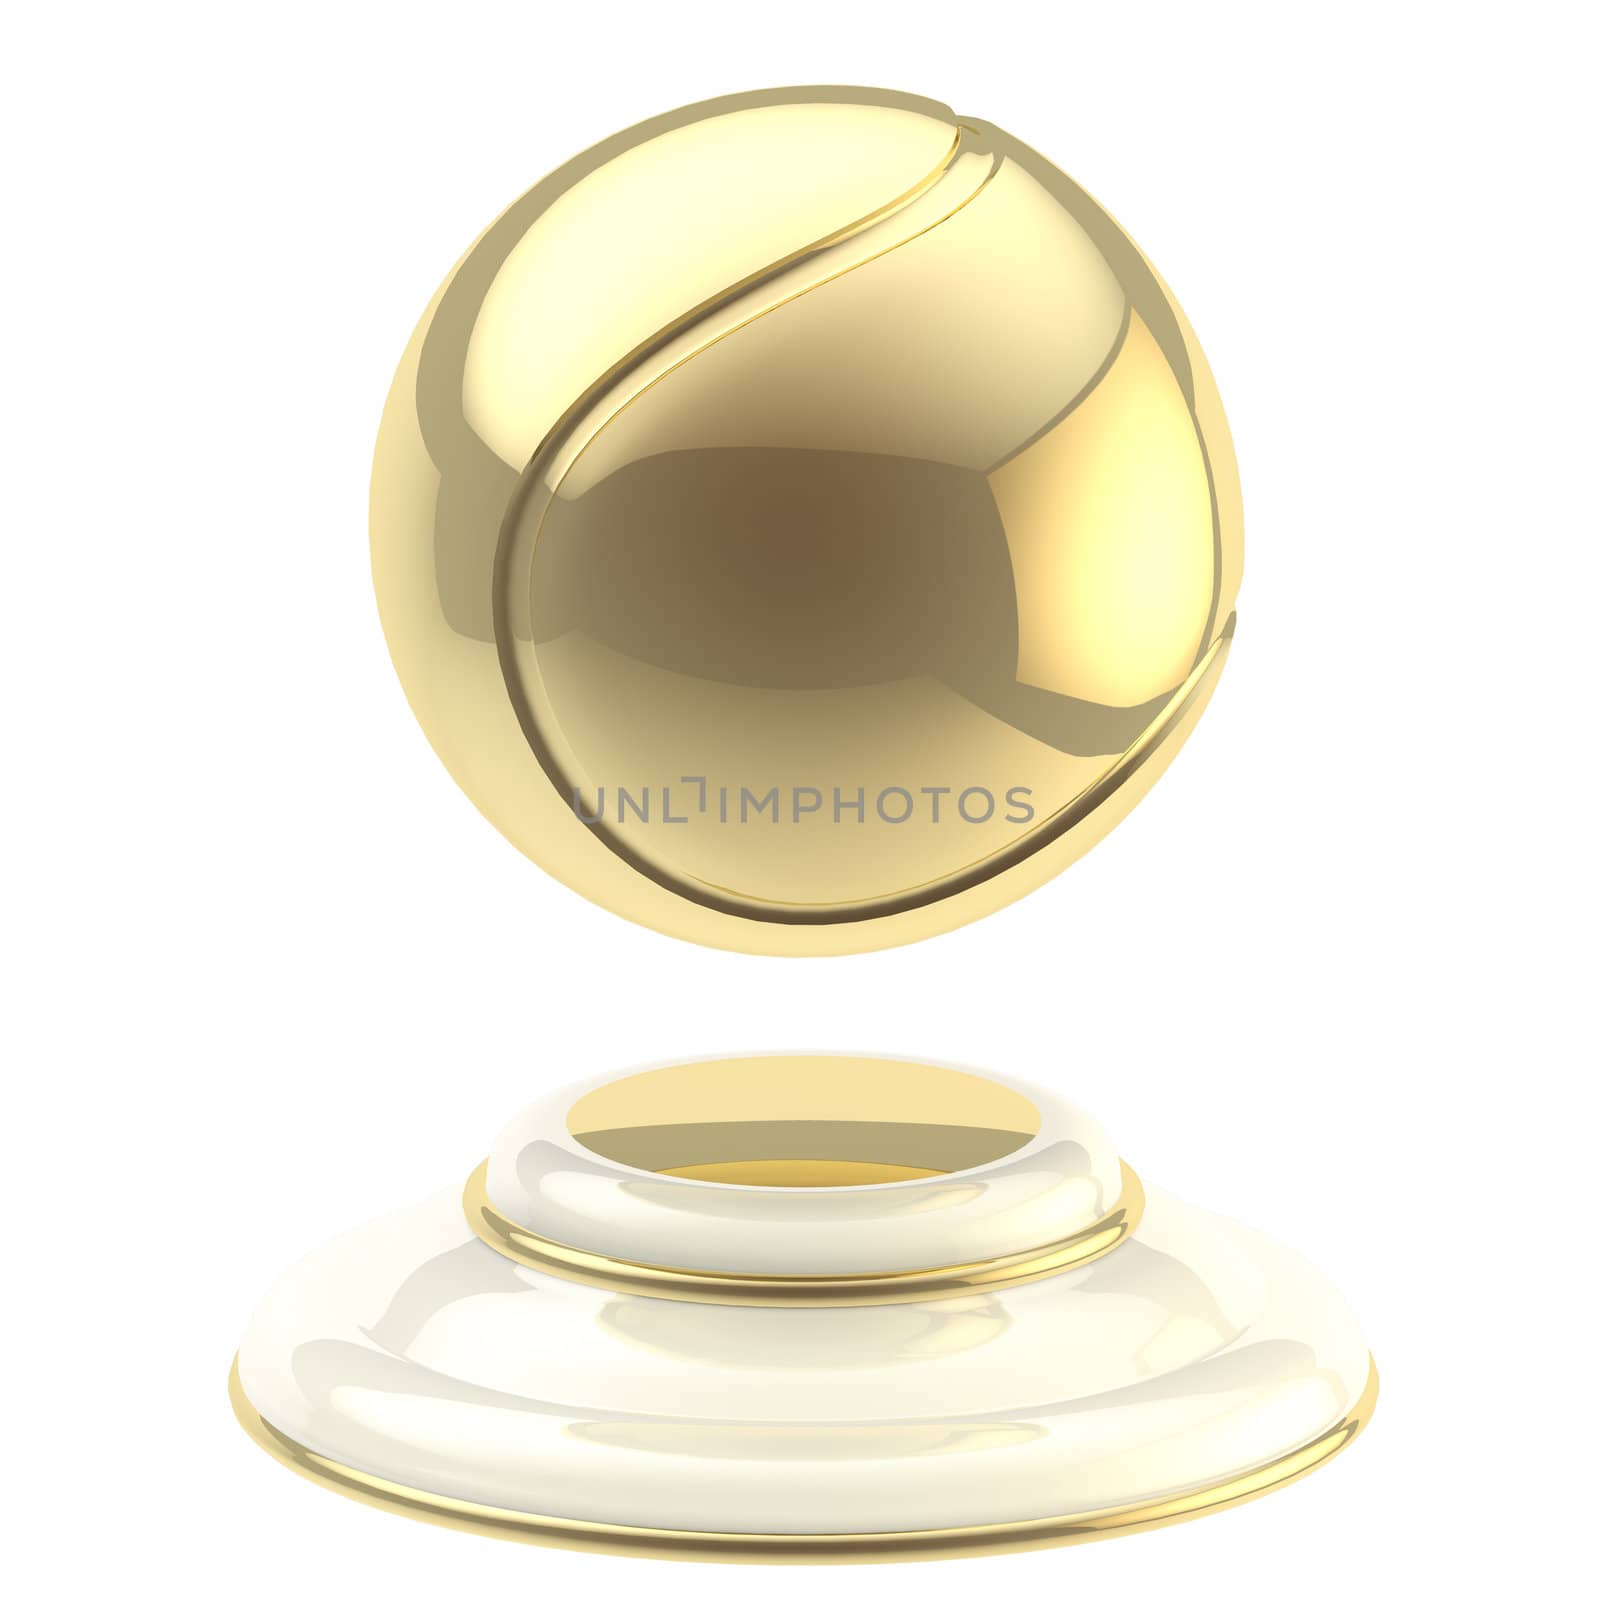 Golden tennis ball champion goblet isolated on white